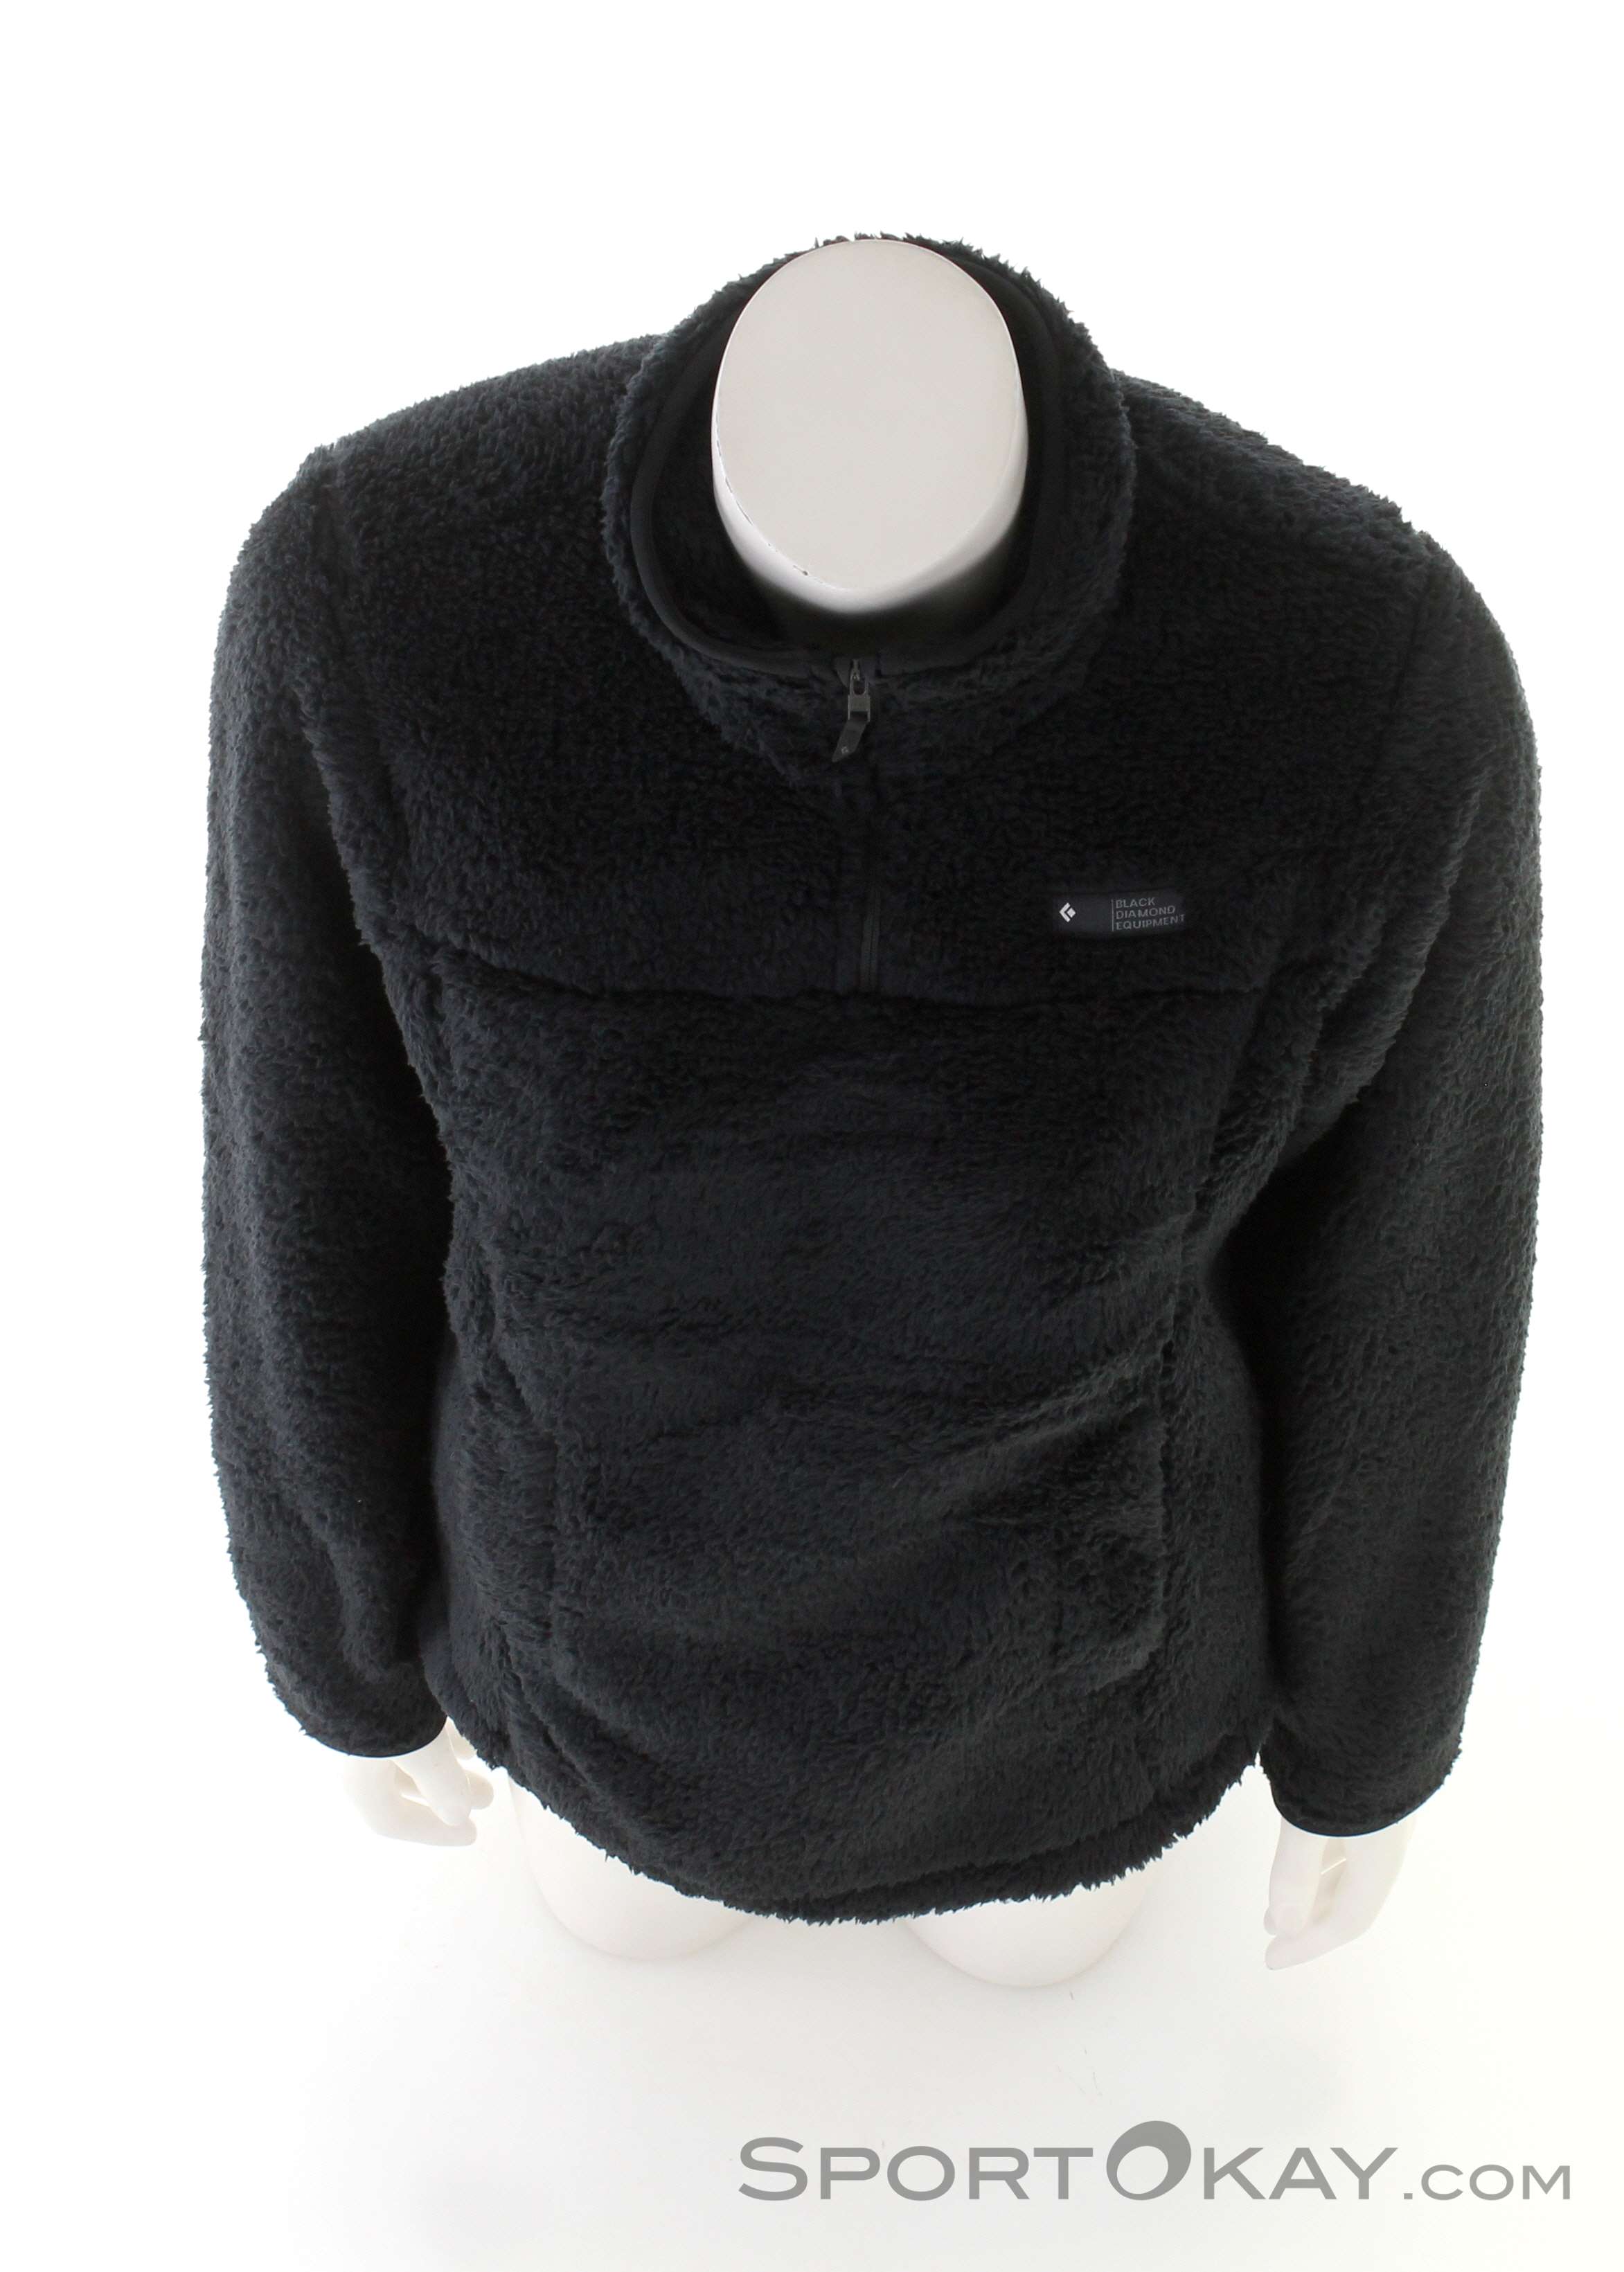 Women's Fleece Jacket  Black Diamond® Equipment